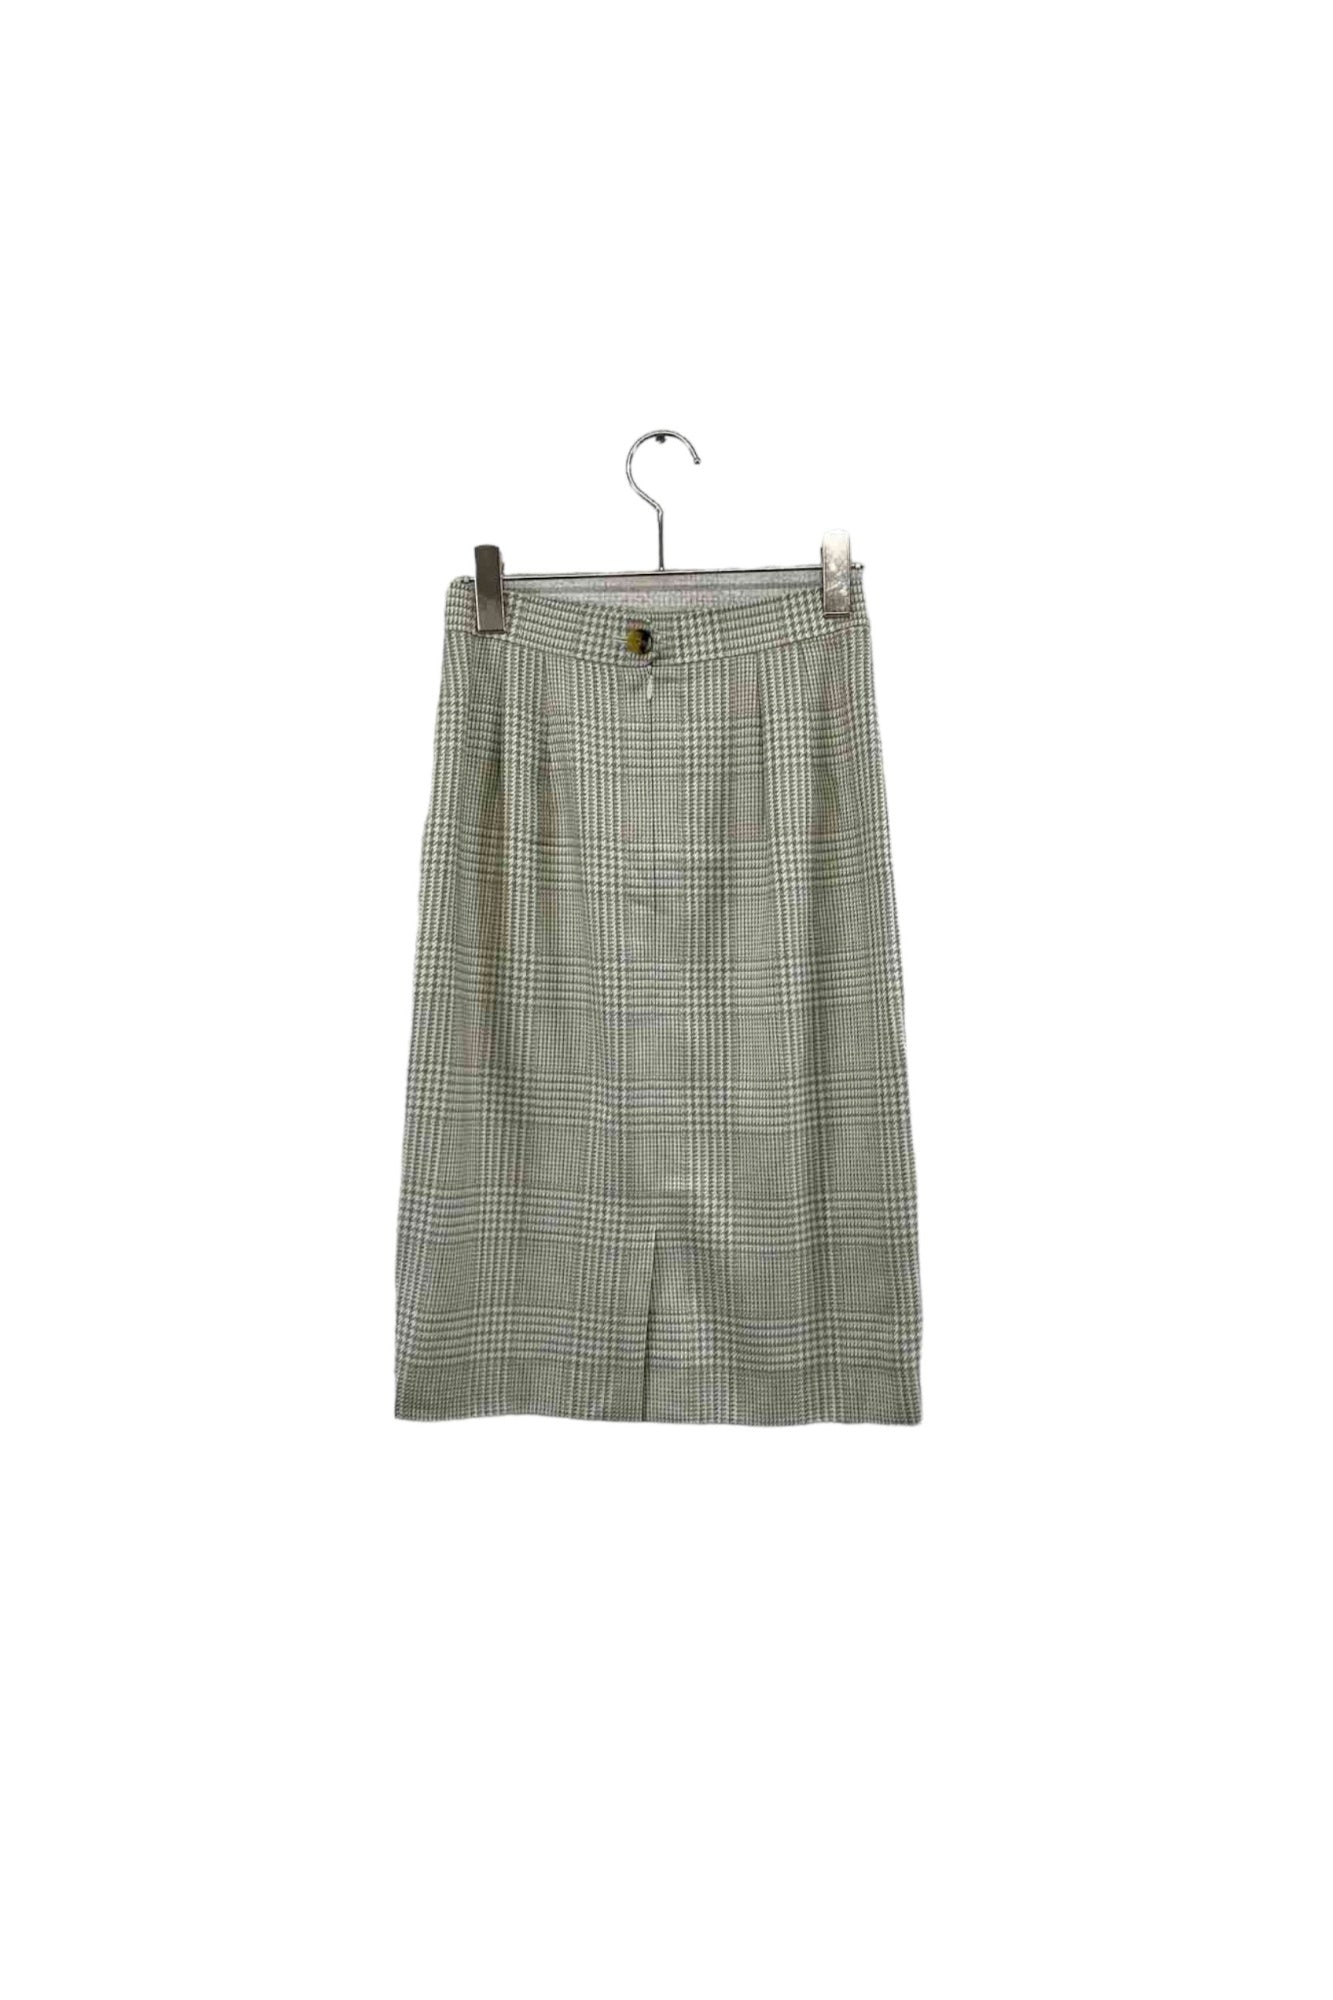 Aquascutum green check skirt